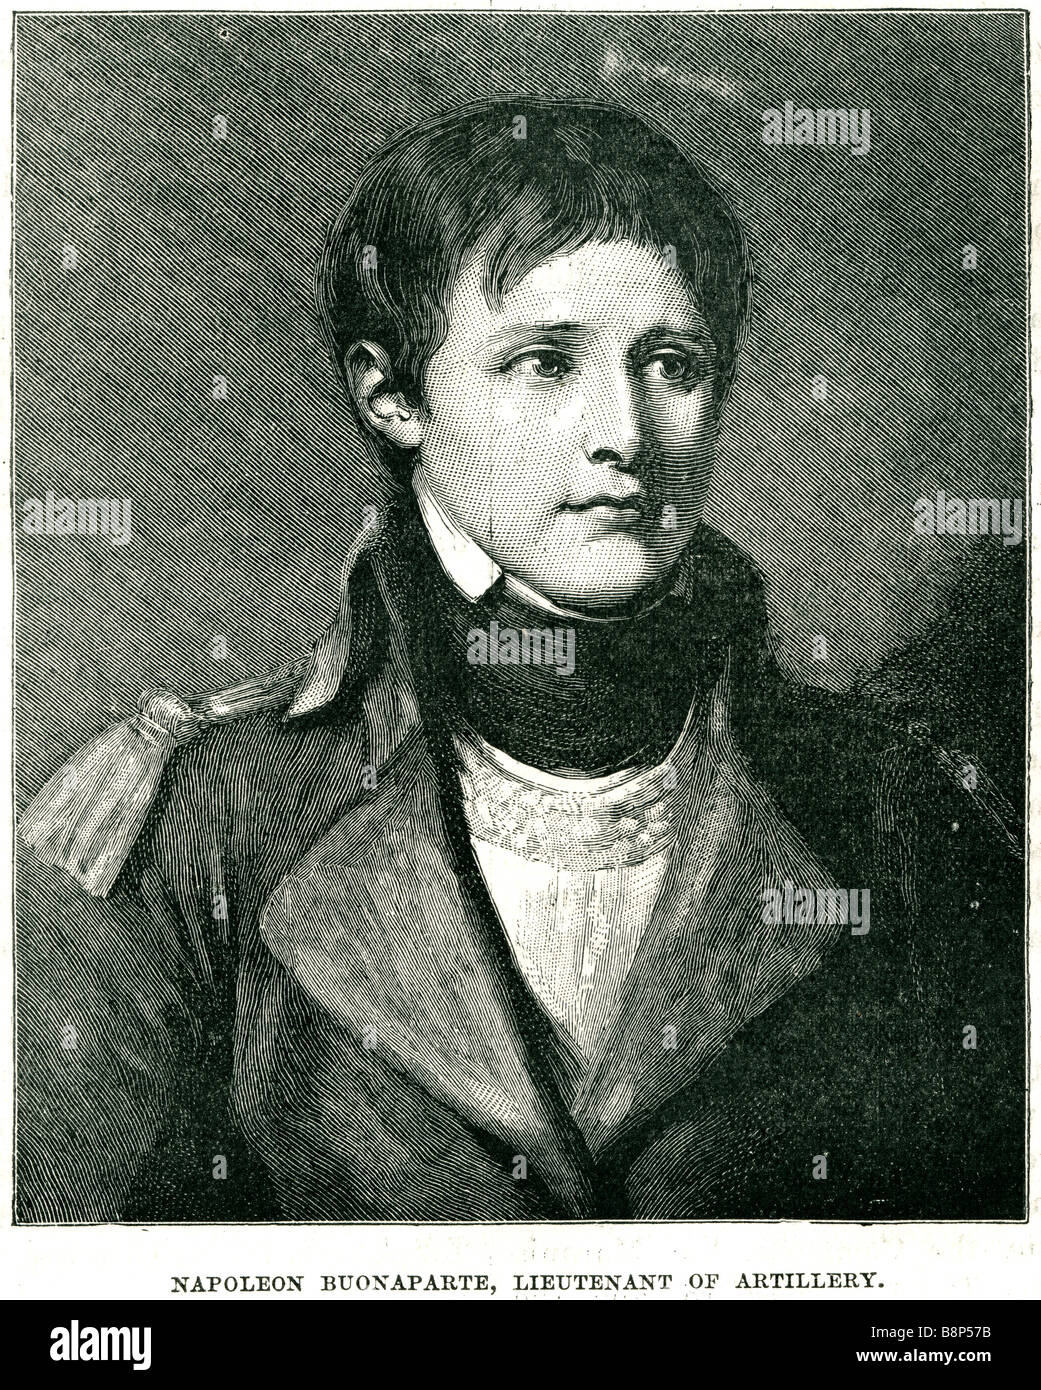 napoleon buonaparte lieutenant of artillaery 15 August 1769 – 5 May 1821 Emperor military political leader France European Stock Photo